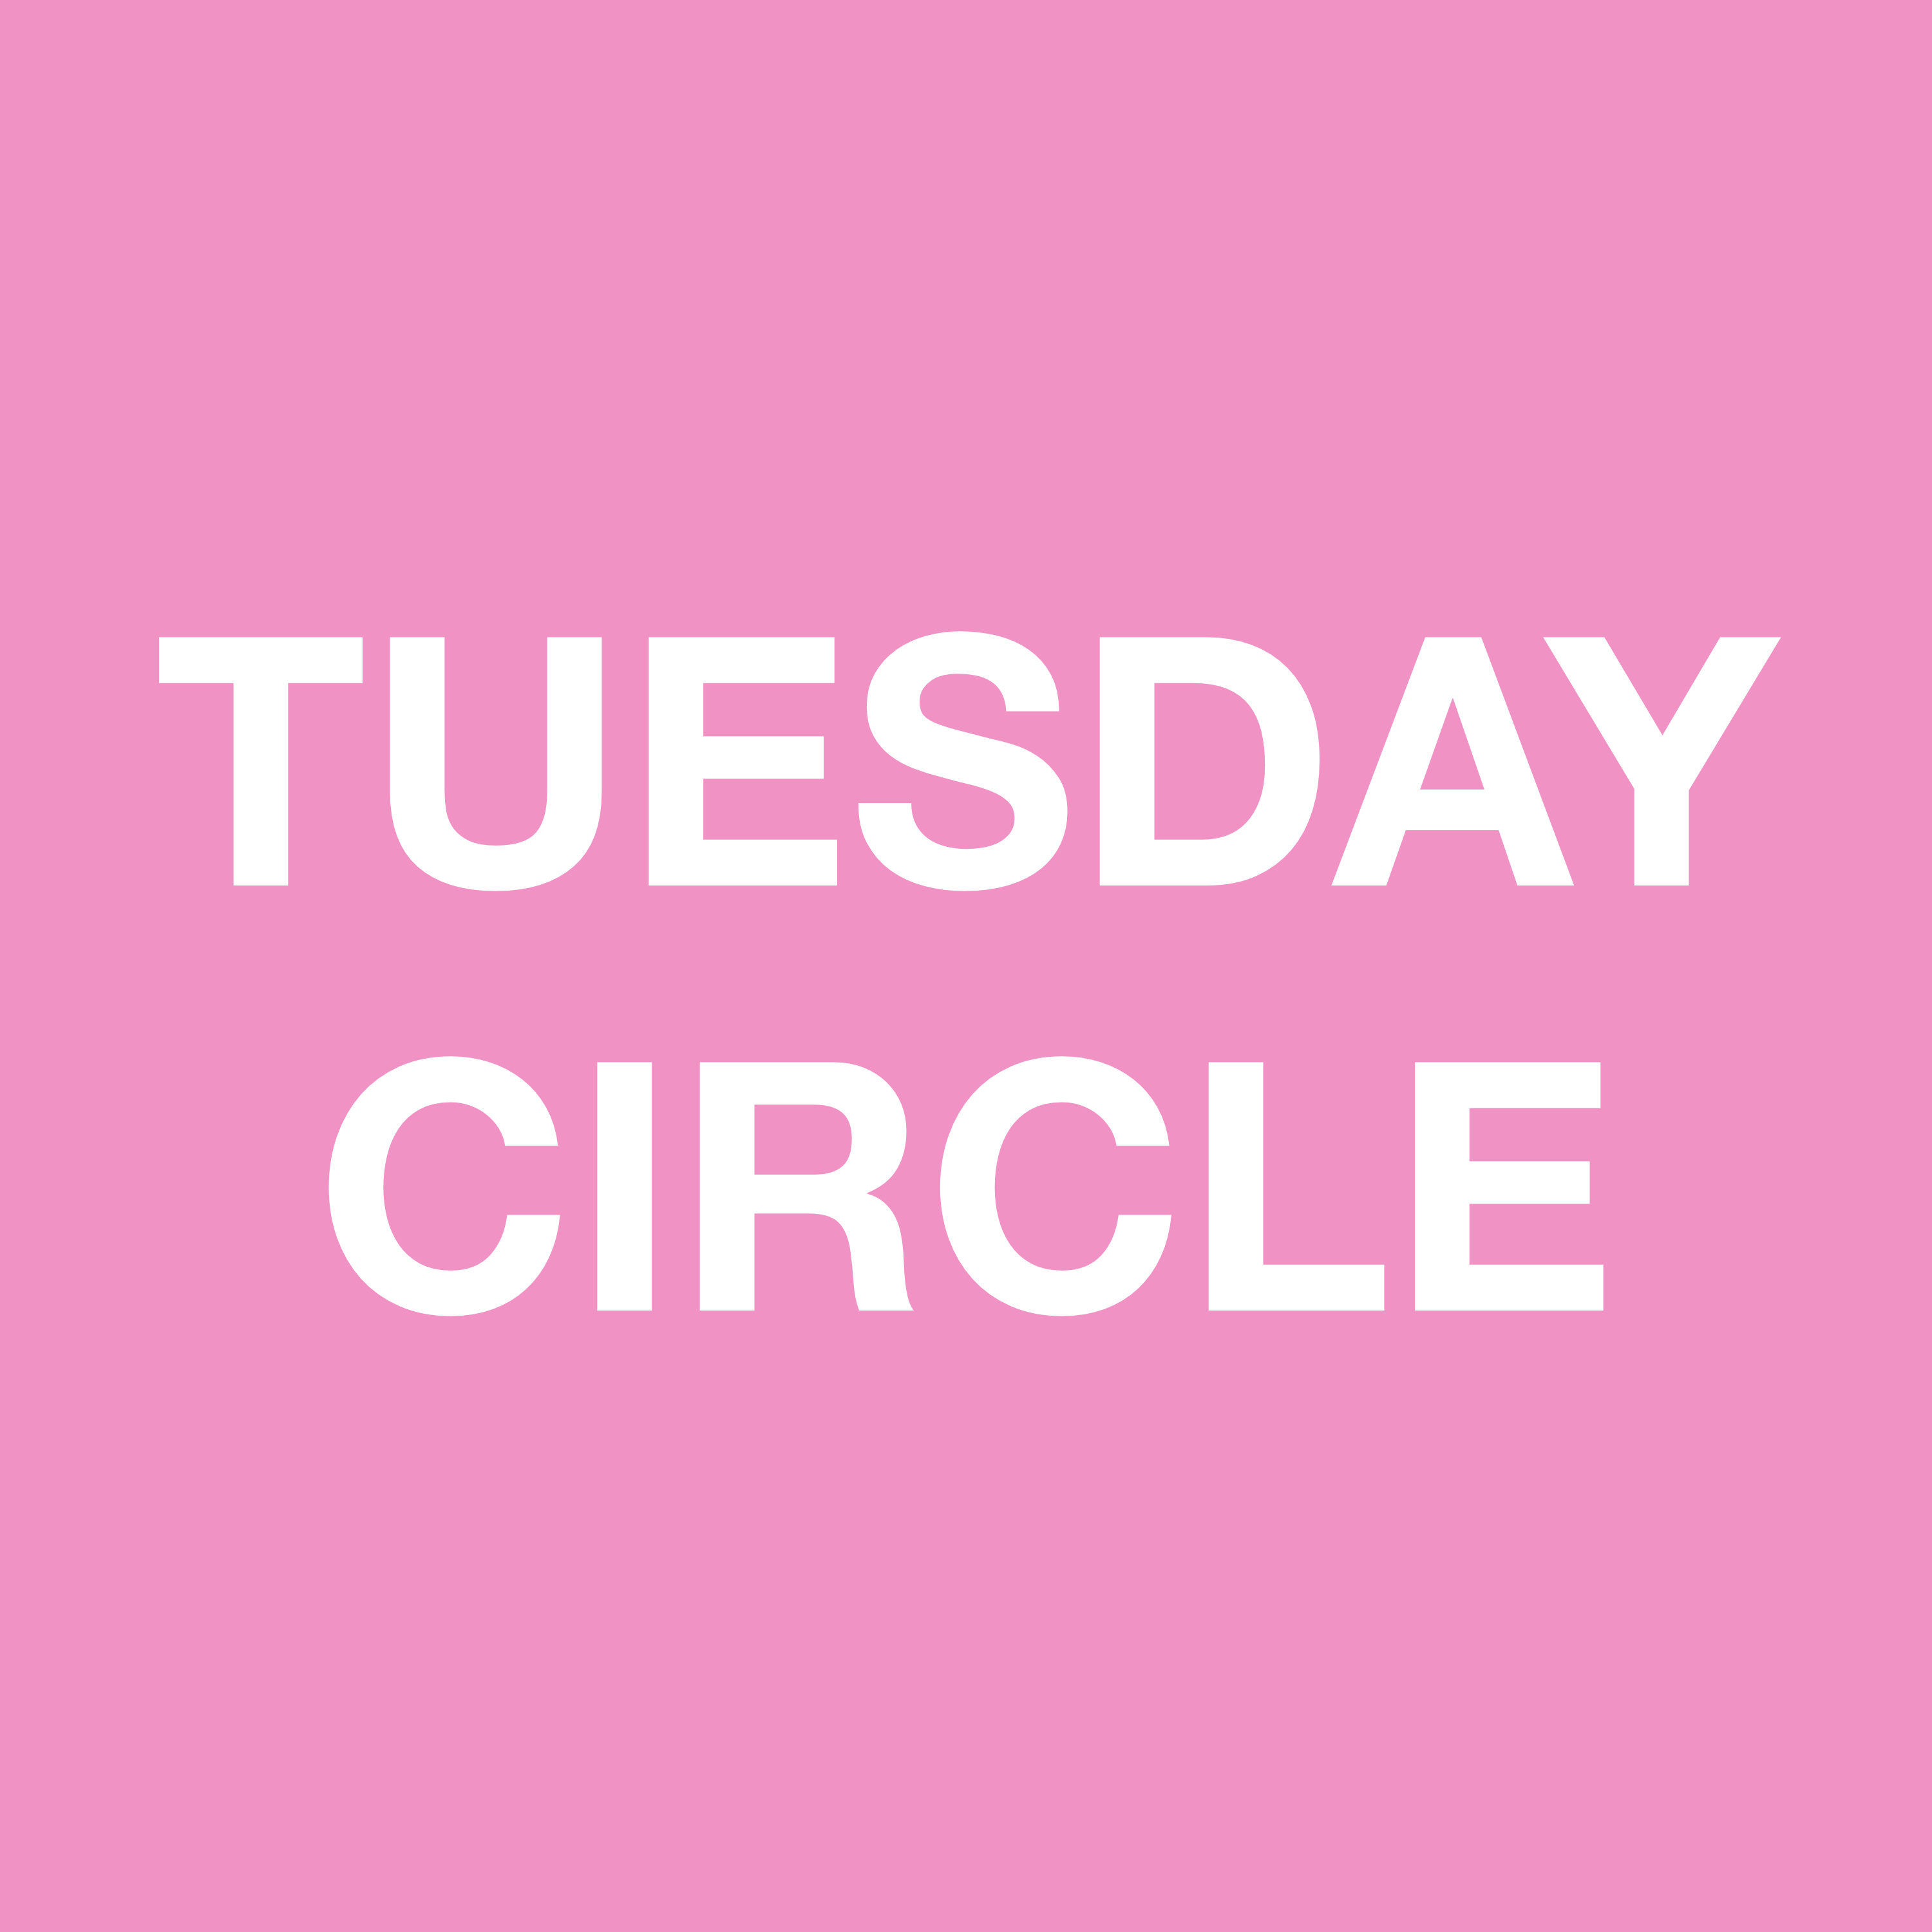 Tuesday Circle Ep.78: รู้จักวิชาชีพจิตวิทยา - จริยธรรมในการทำงานจิตวิทยา ตอนที่ 1/2